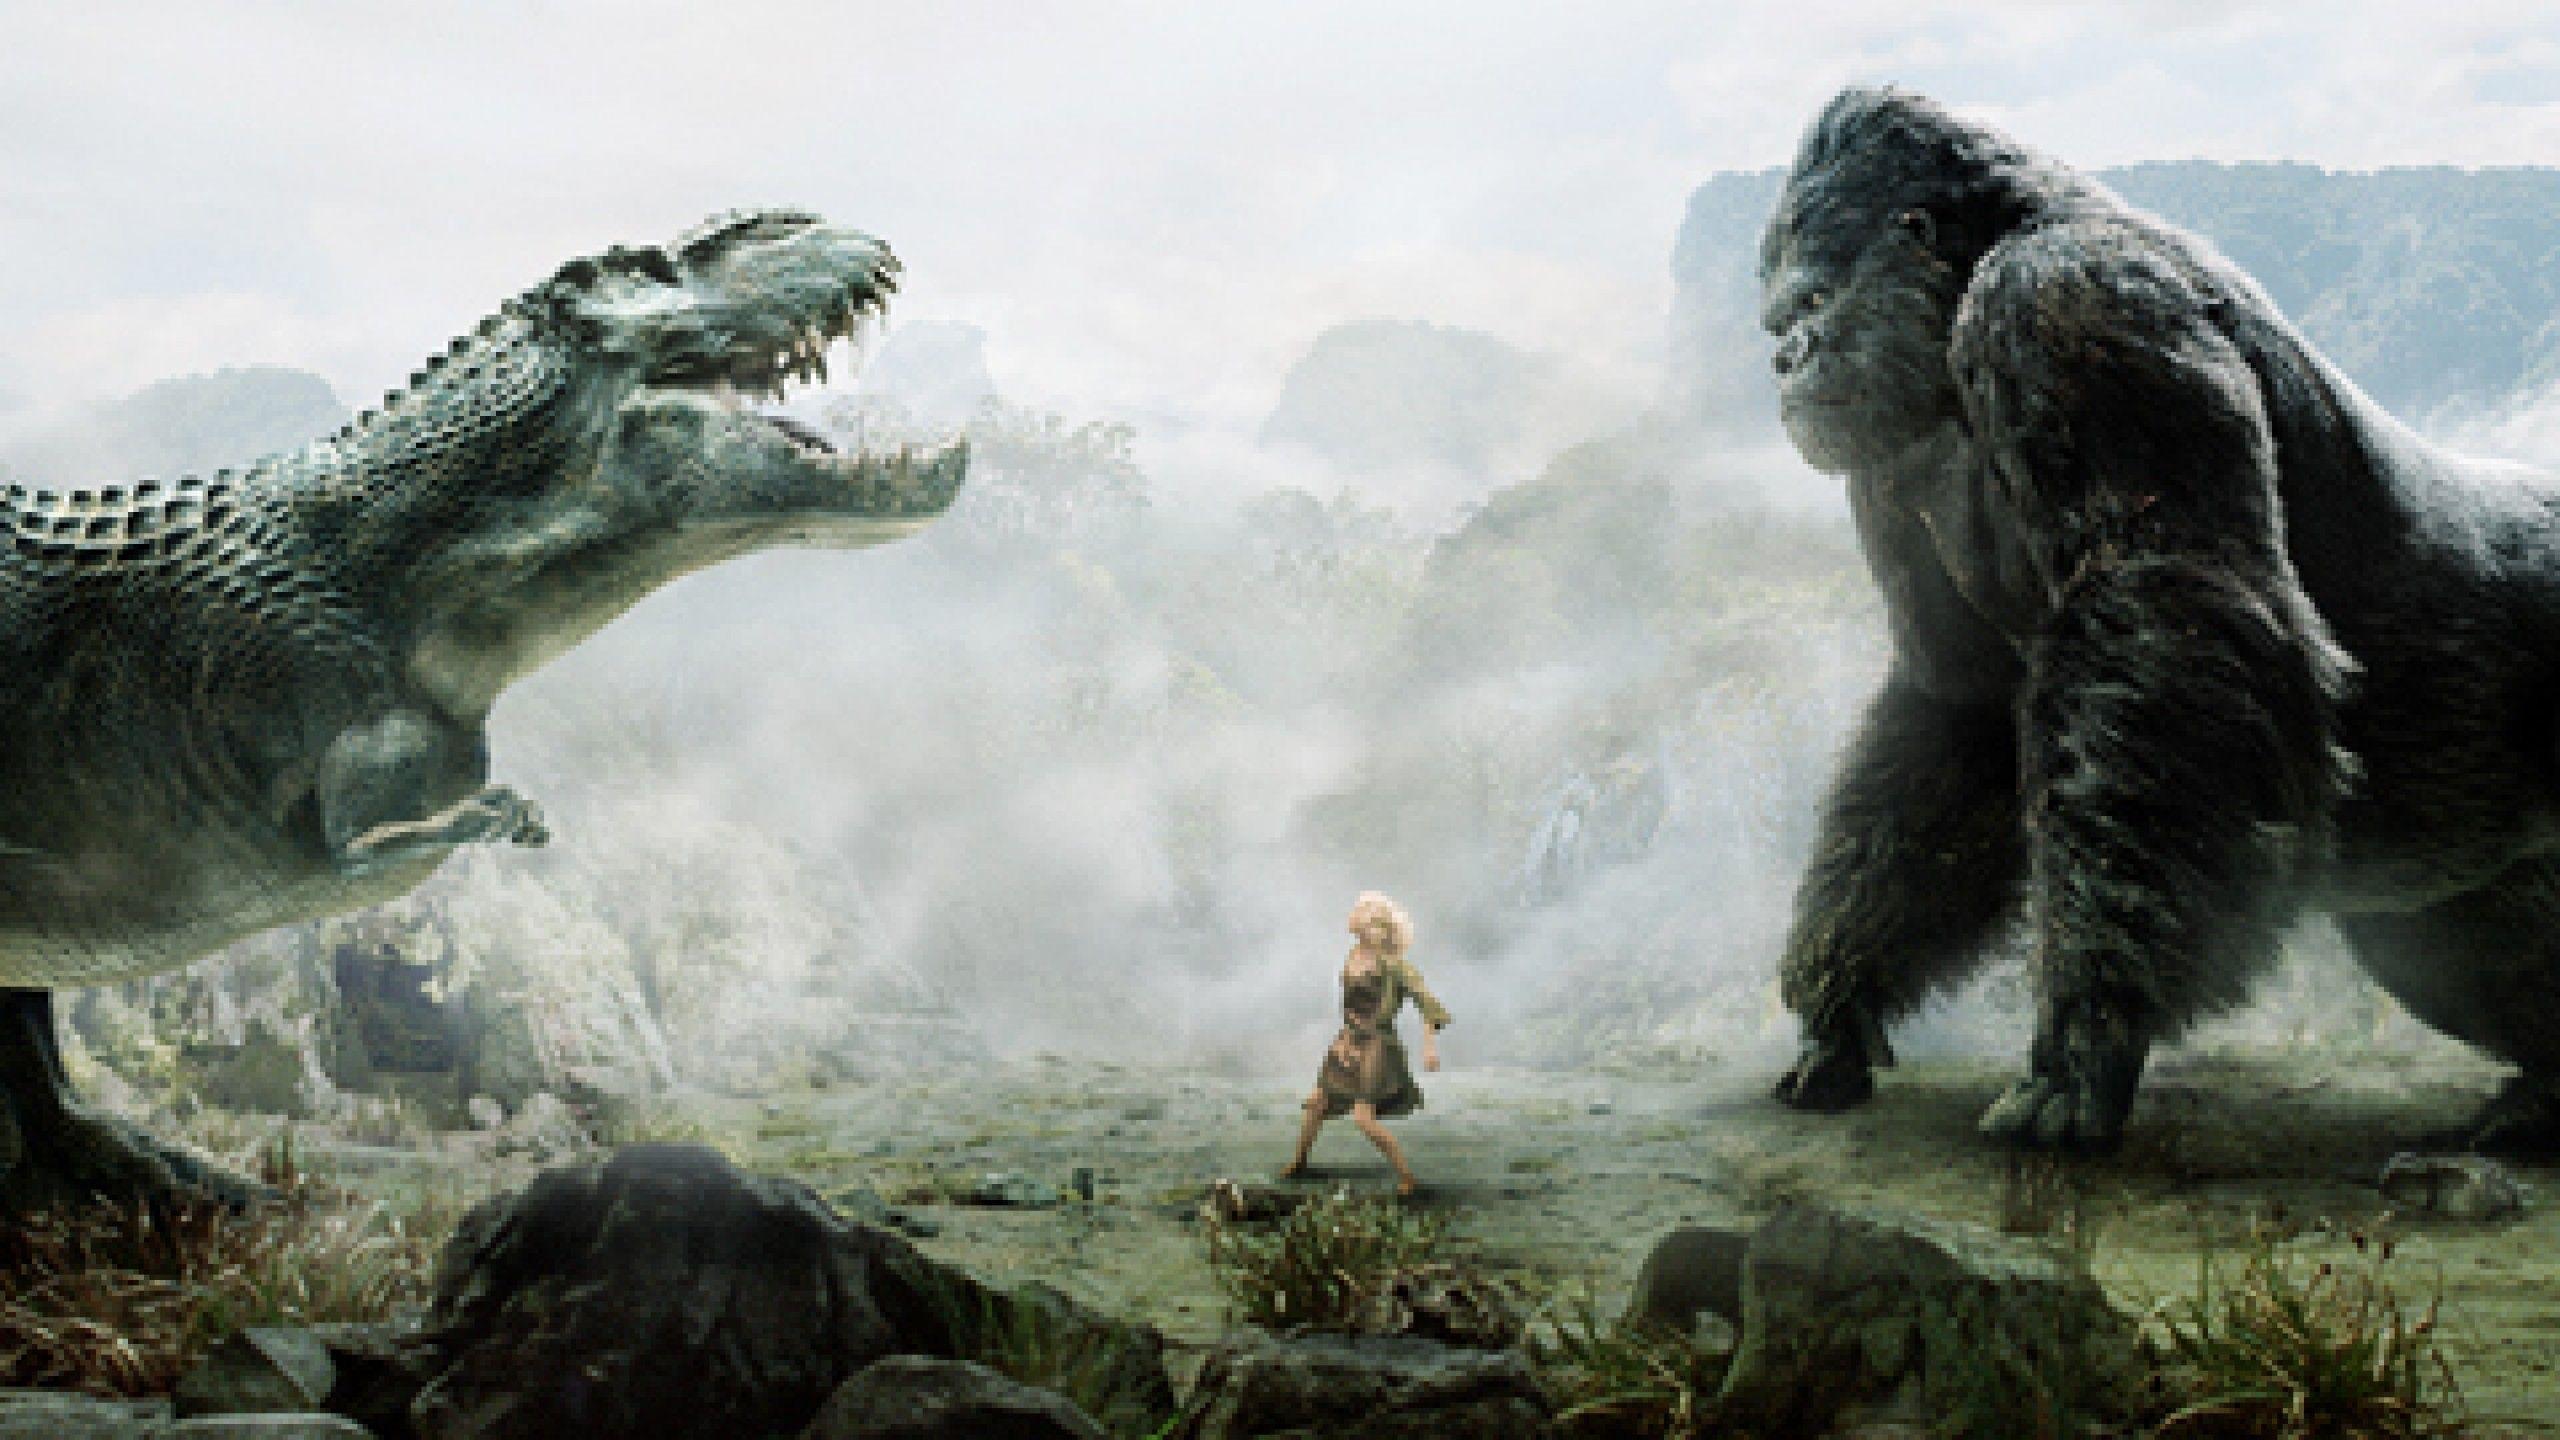 40 Godzilla vs Kong HD Wallpapers and Backgrounds